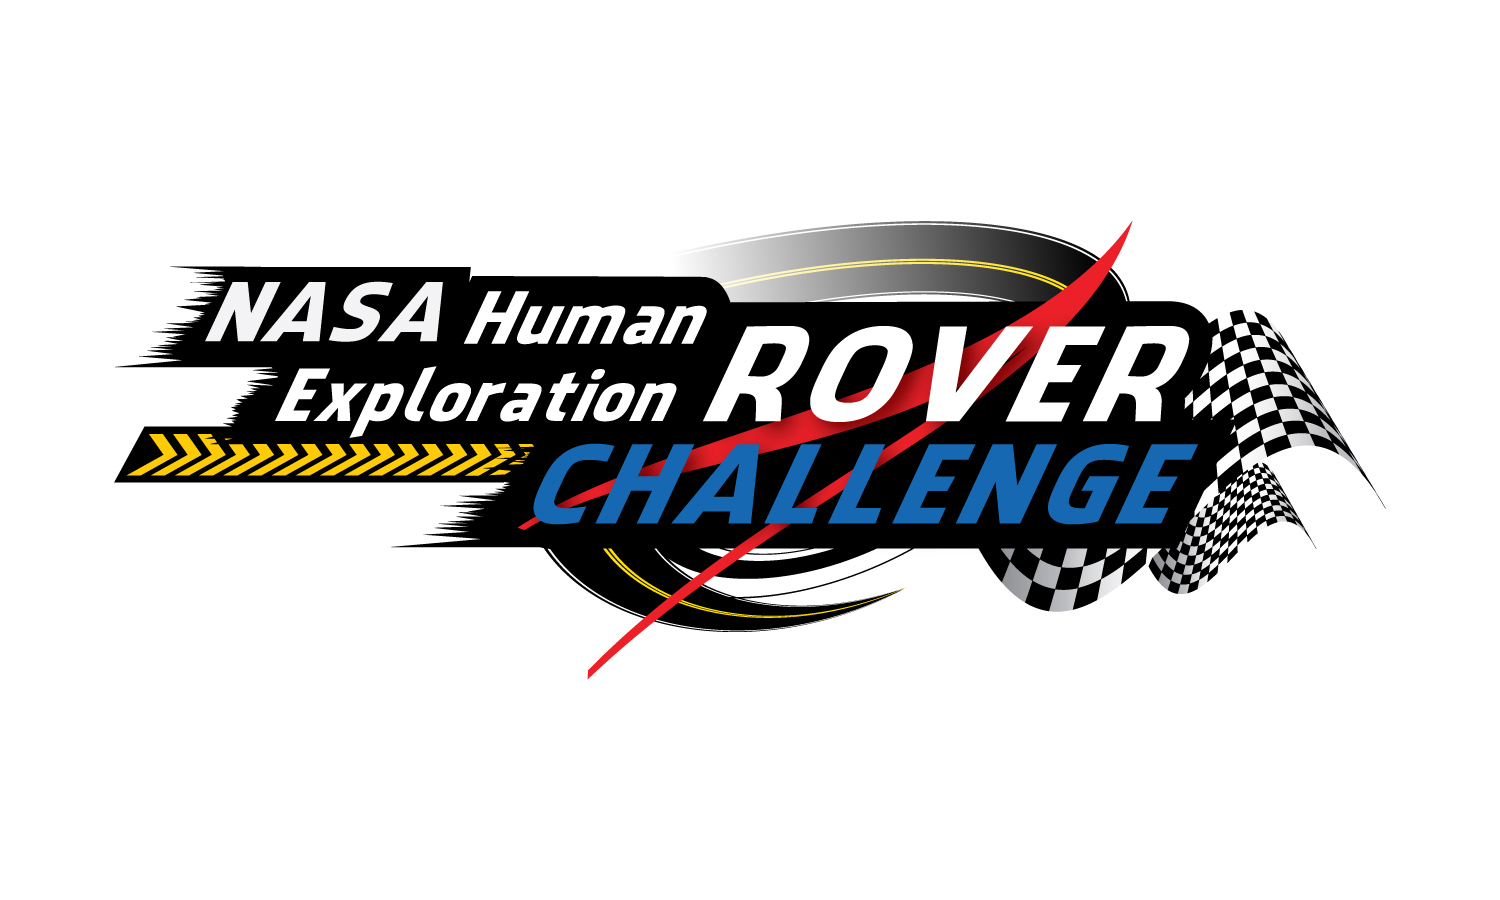 NASA Human Exploration Rover Challenge graphic.